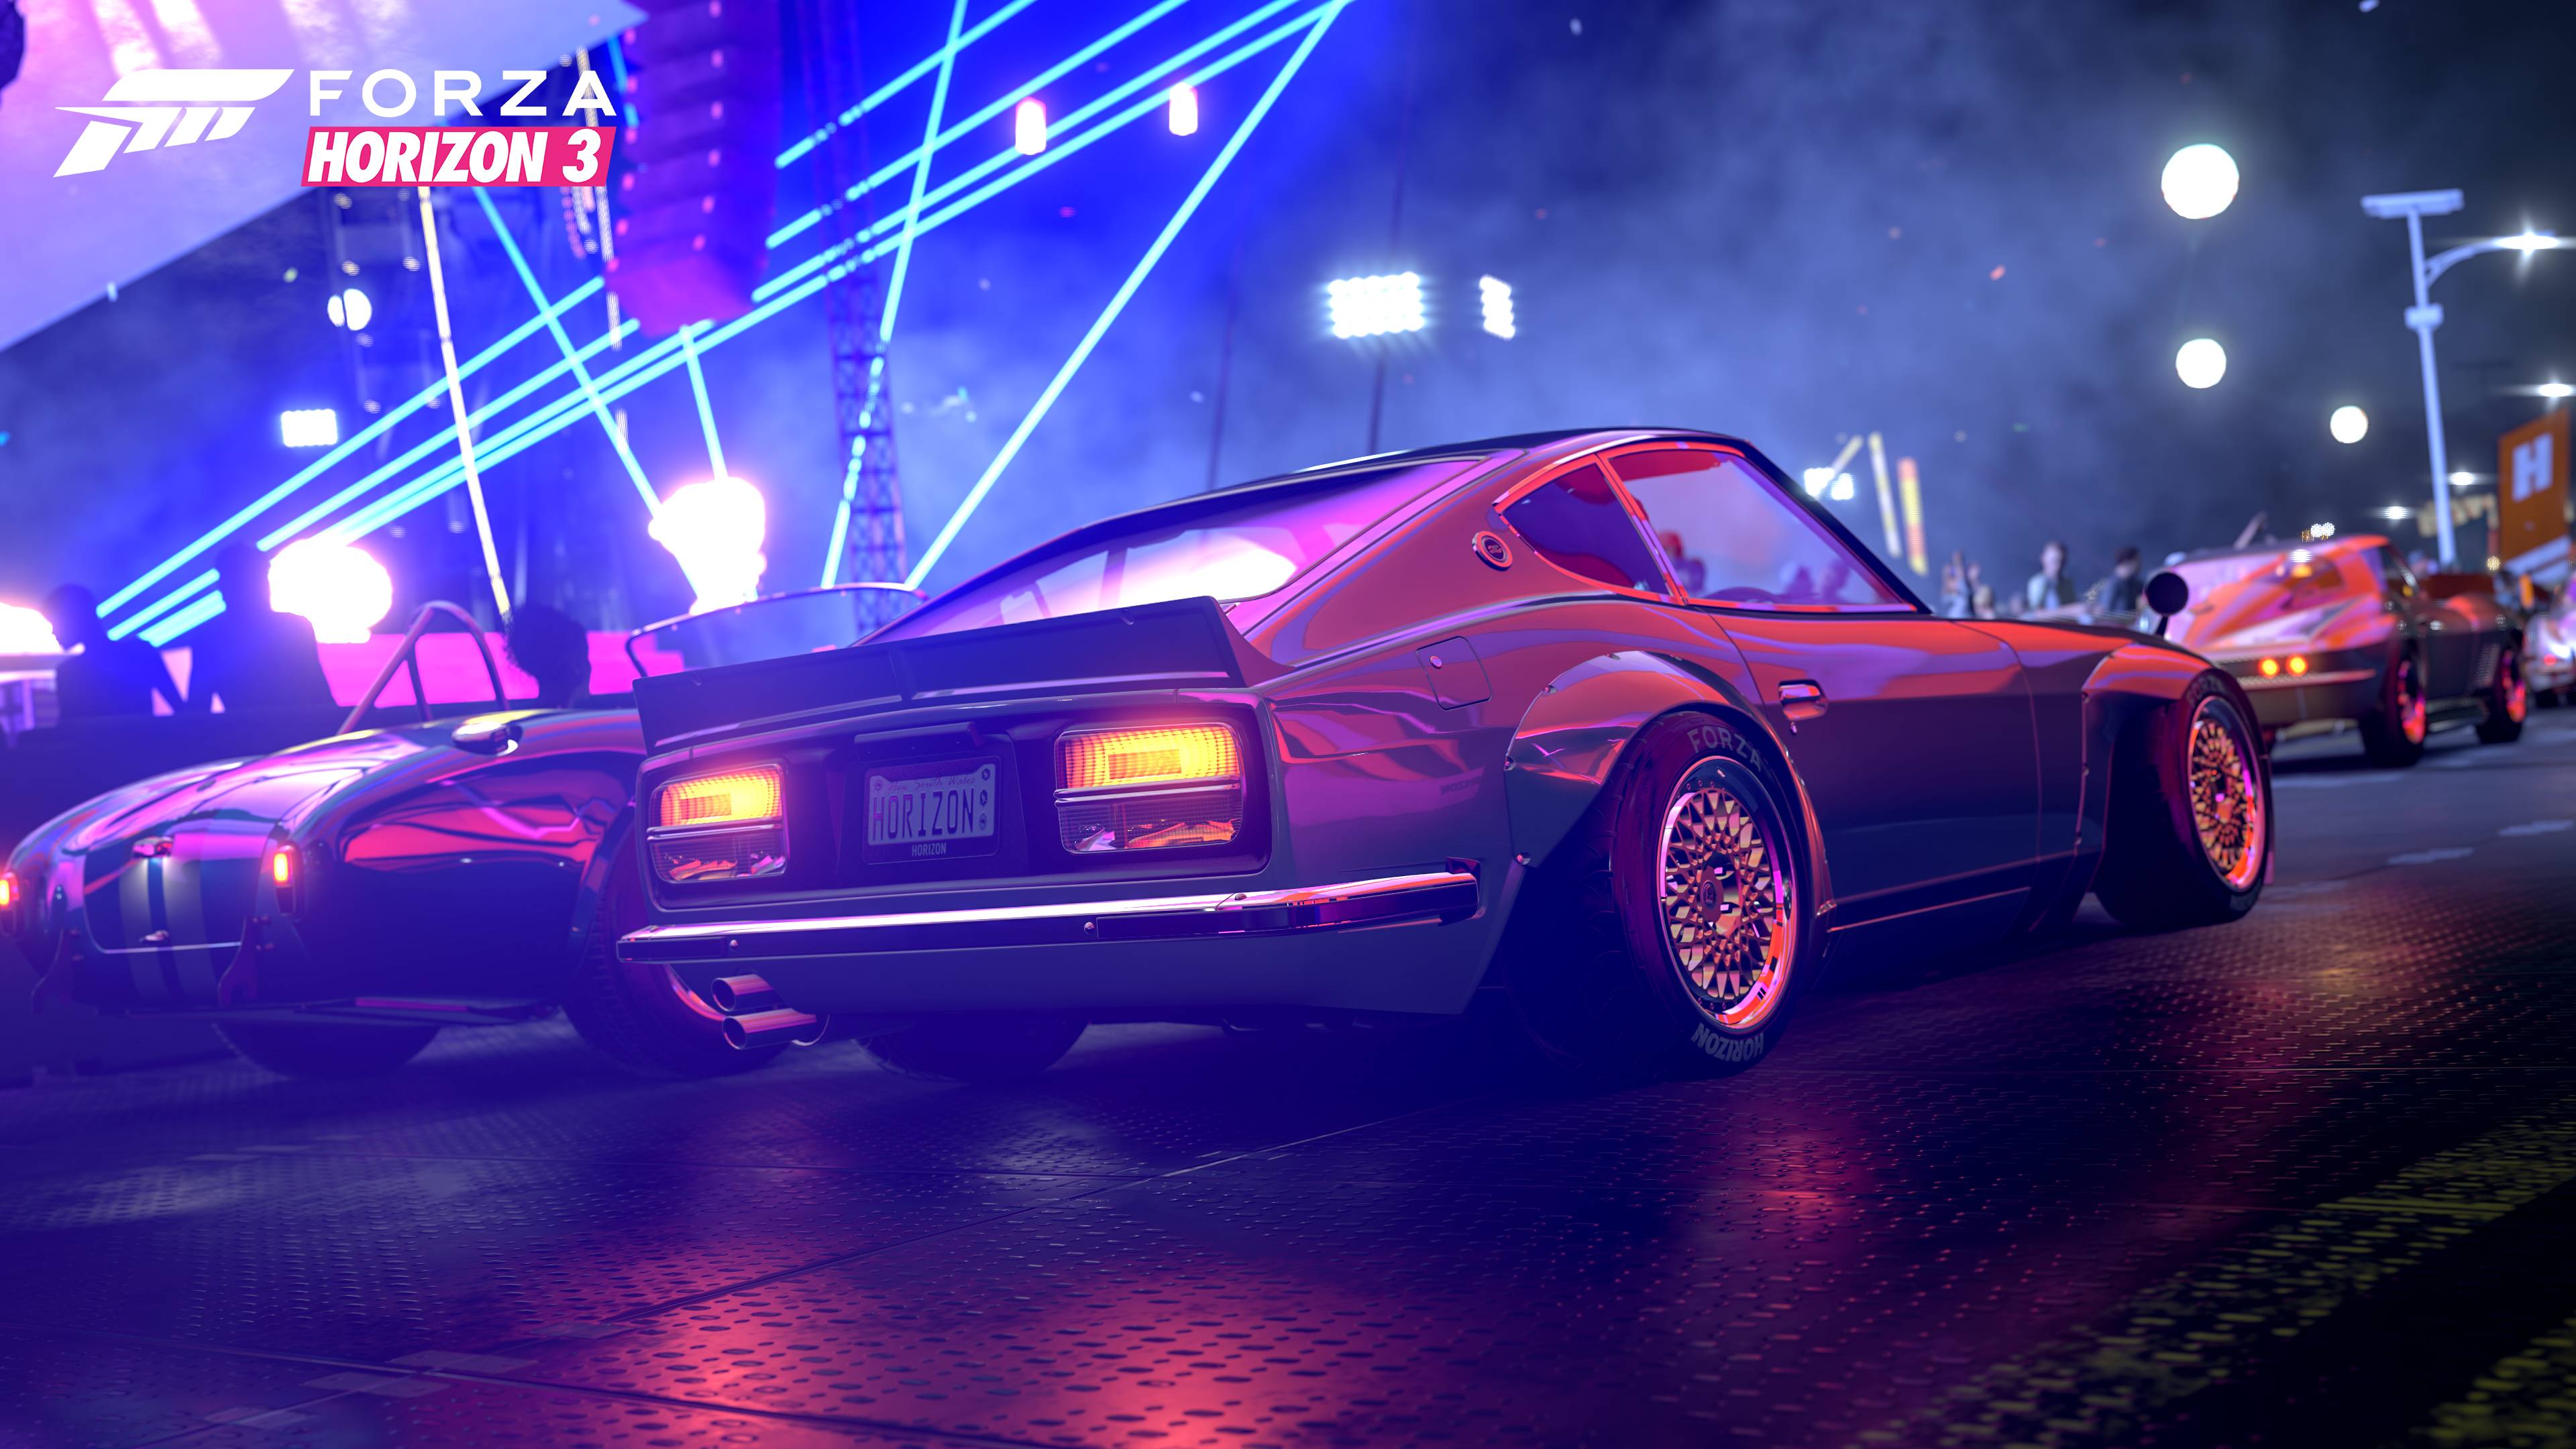 Ford Mustang Forza Games Forza Neon Glow Racing Street Light Forza Horizon 3 Neon